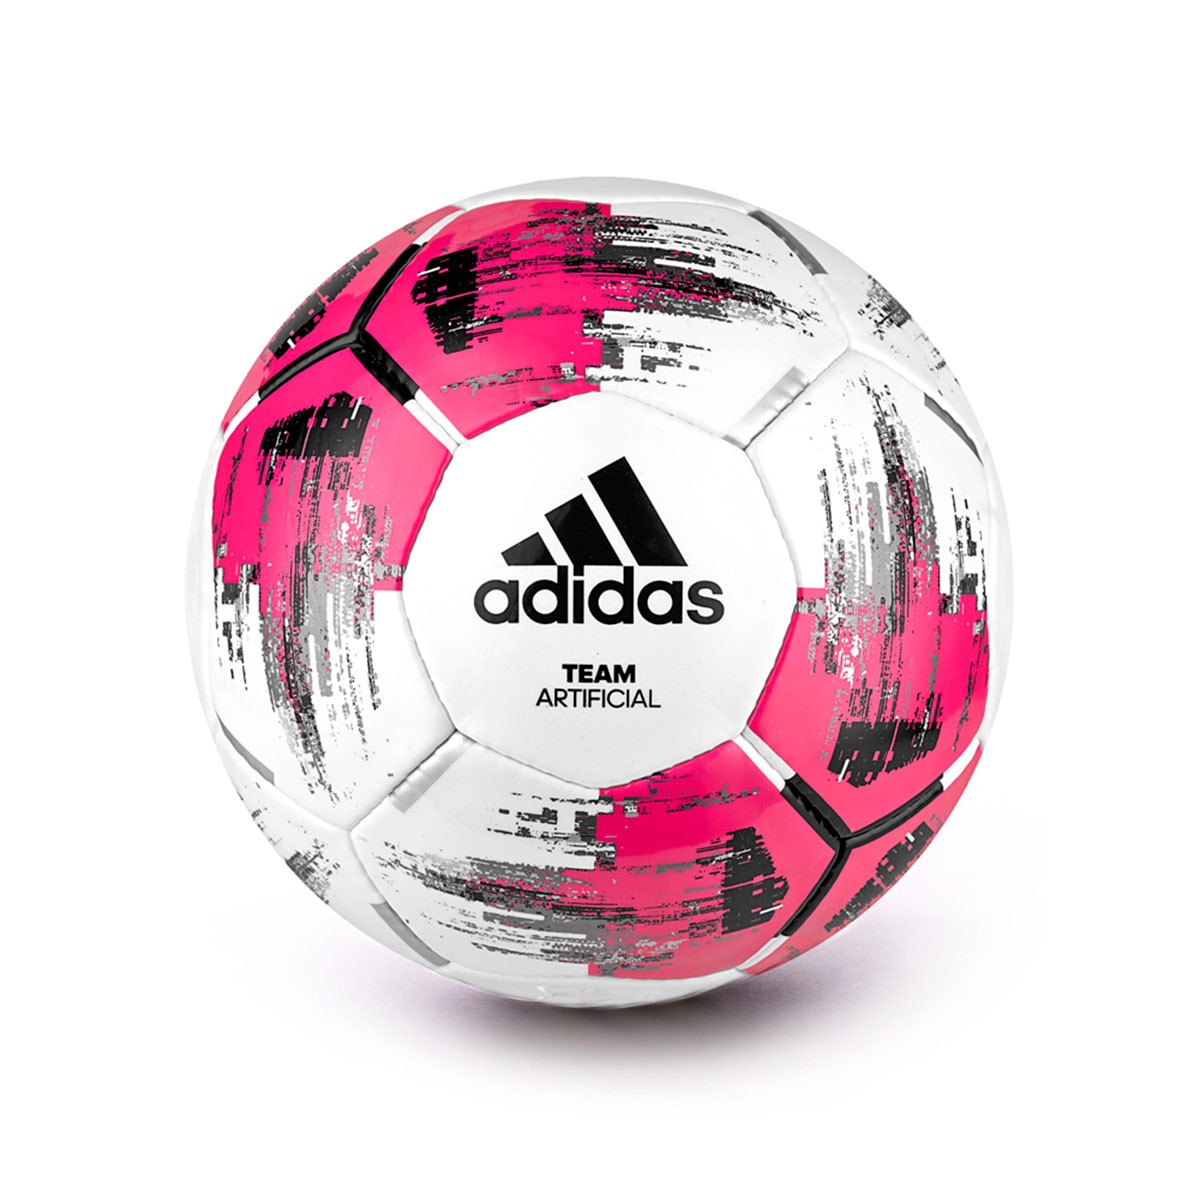 adidas team artificial ball